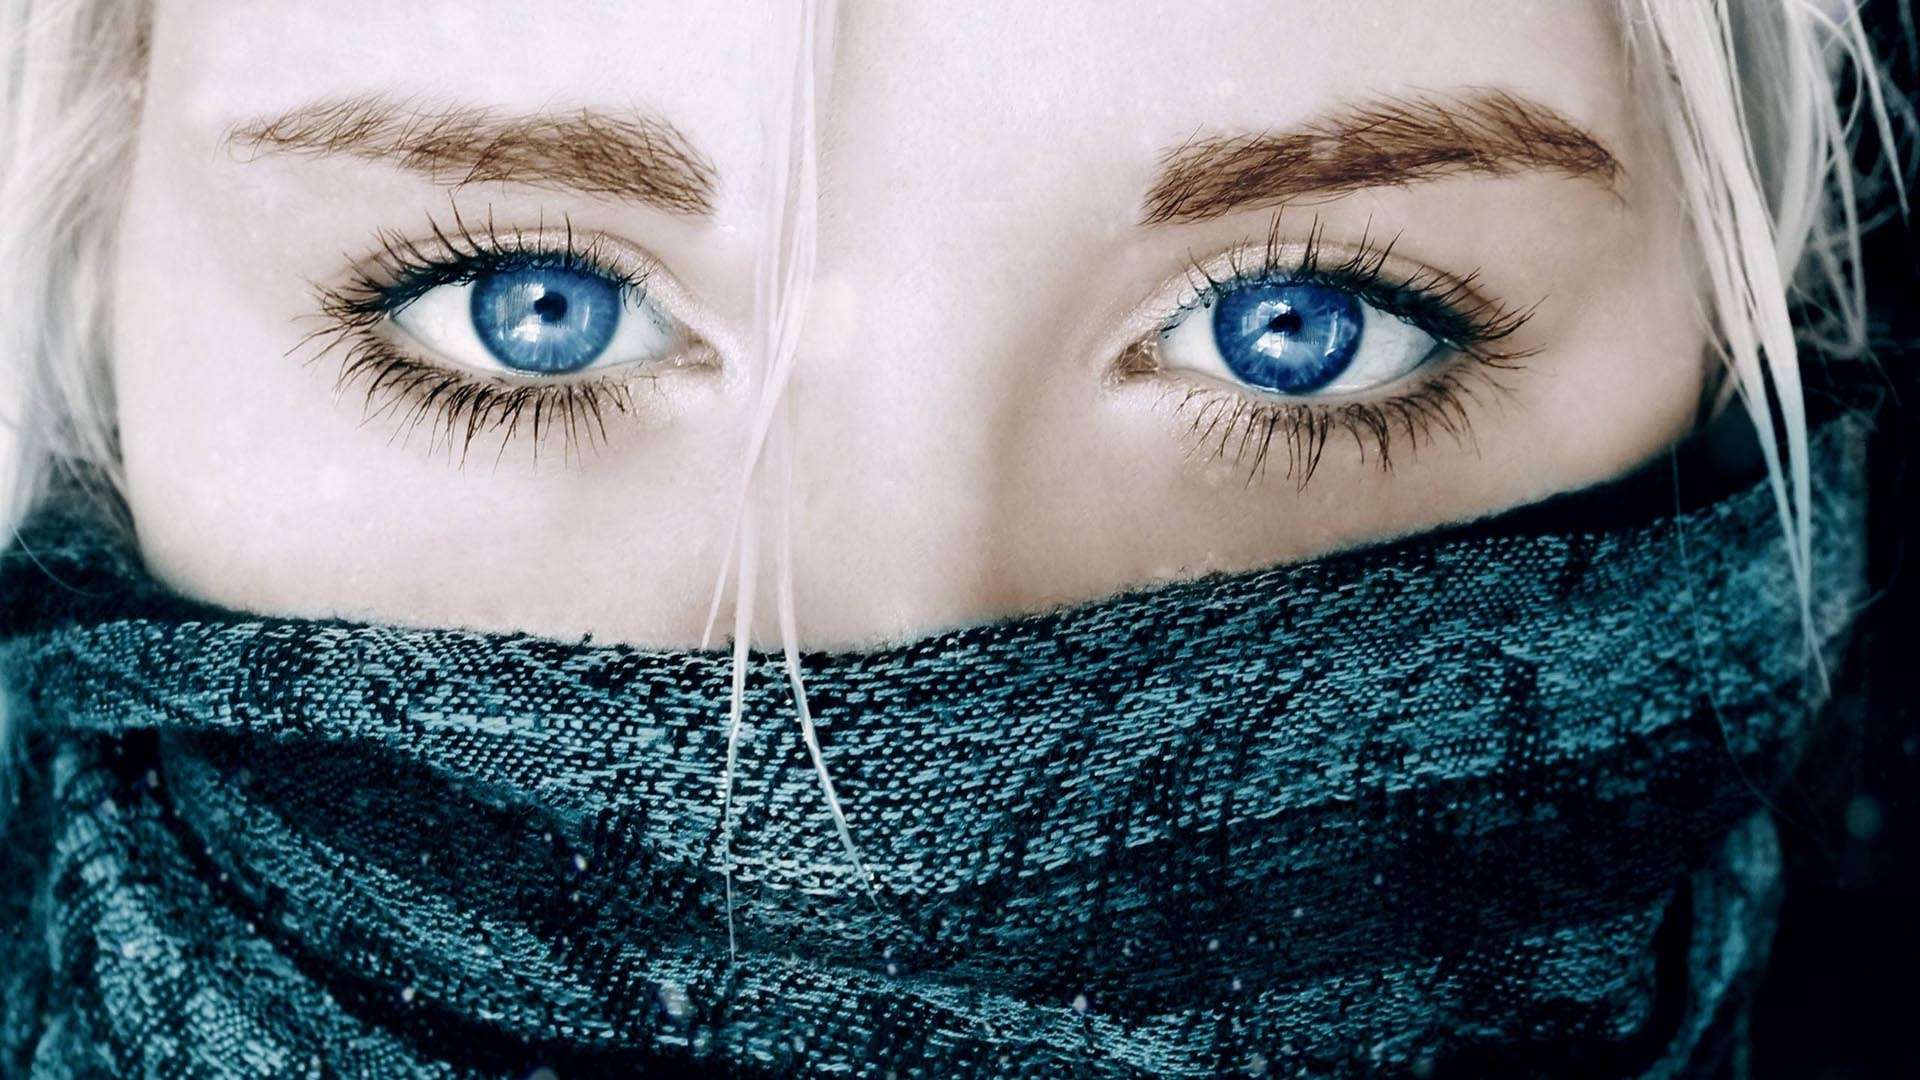 Scarf and blue eyes HD Wallpaper FullHDWpp HD Wallpaper